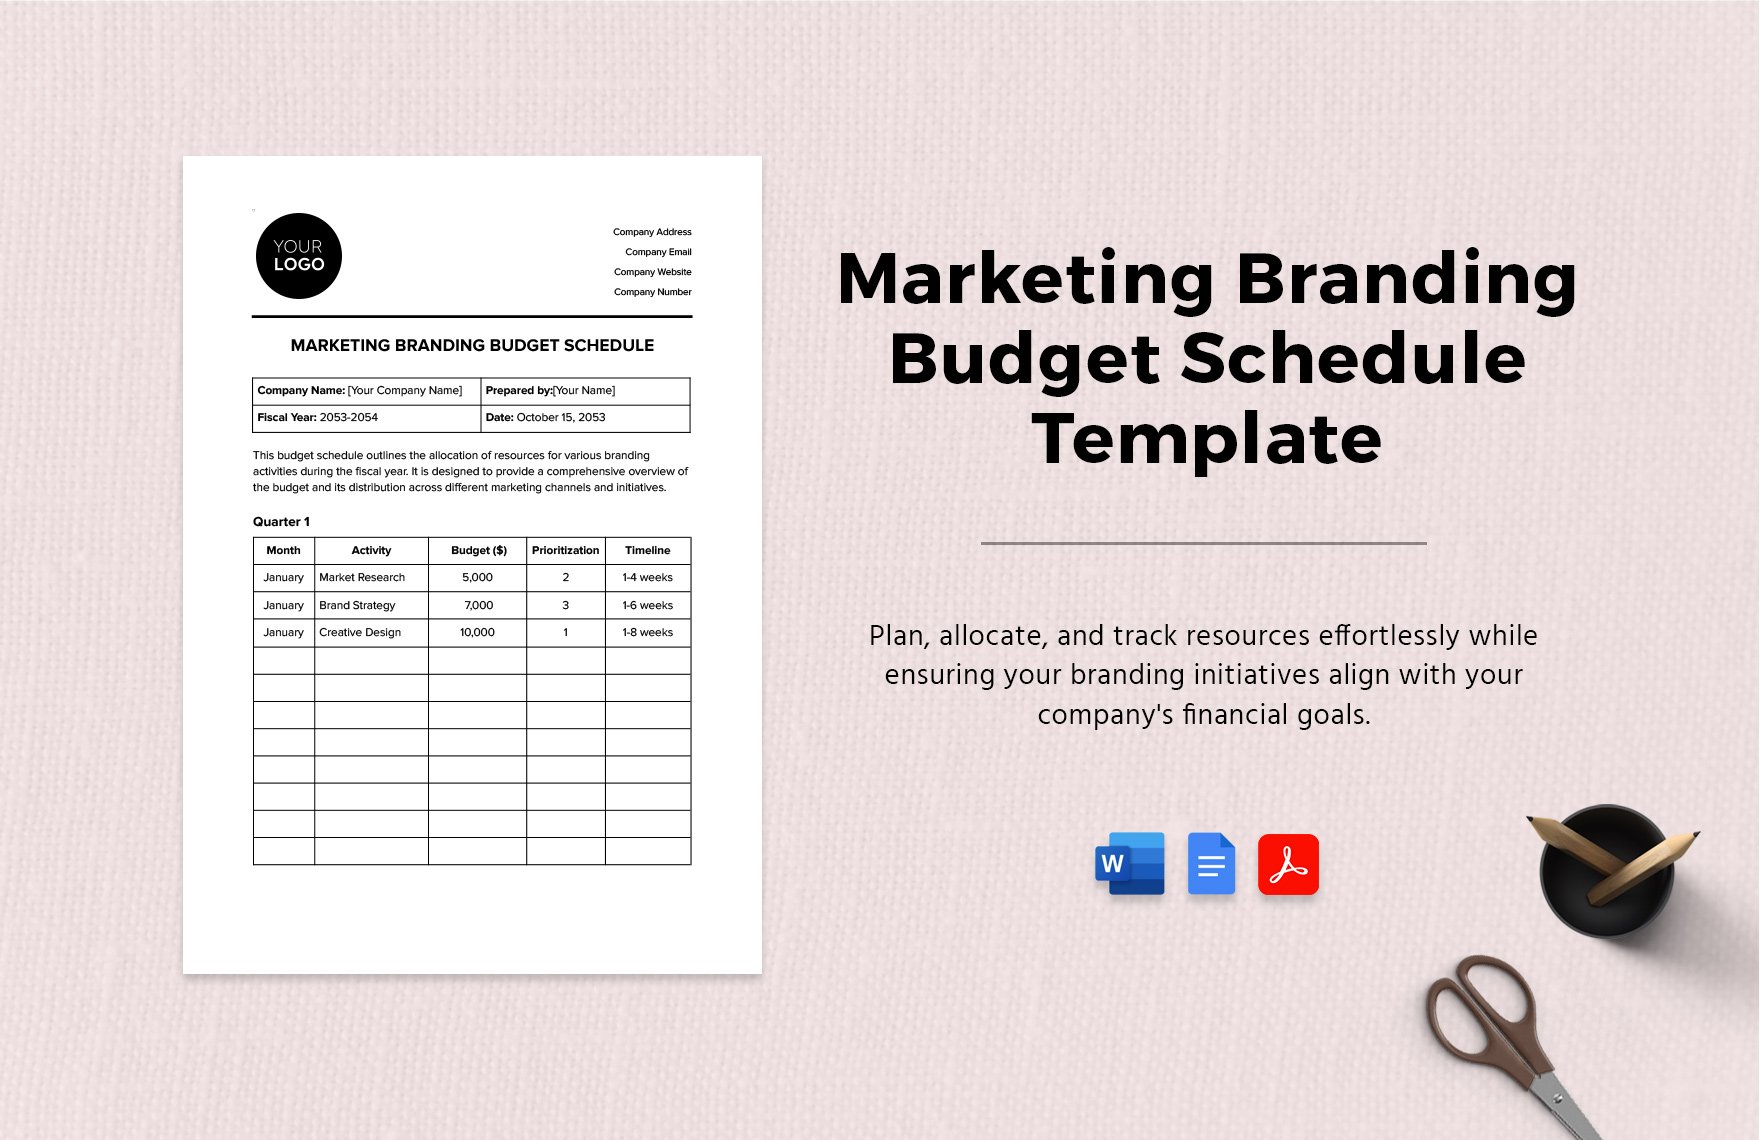 Marketing Branding Budget Schedule Template in Word, Google Docs, PDF